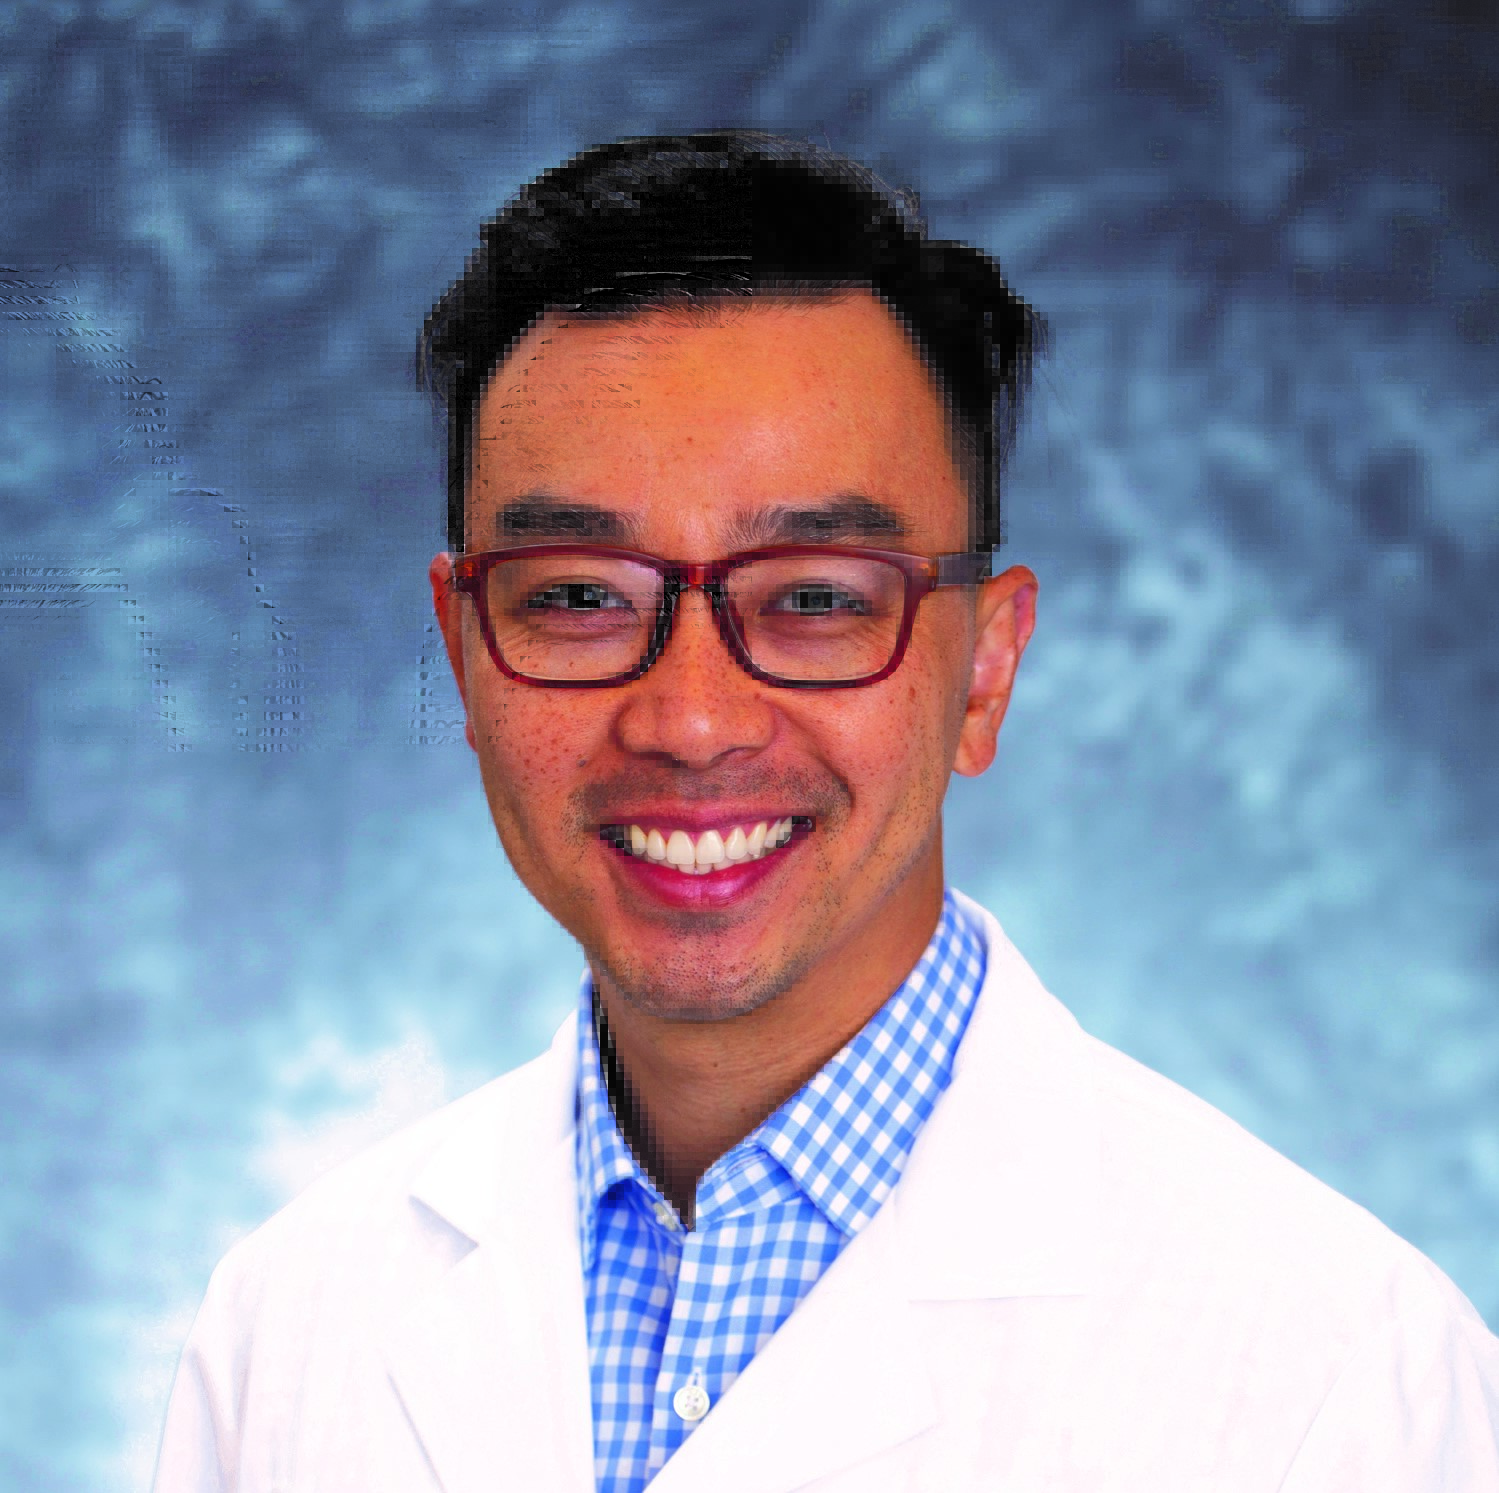 Dr. Hung Nguyen